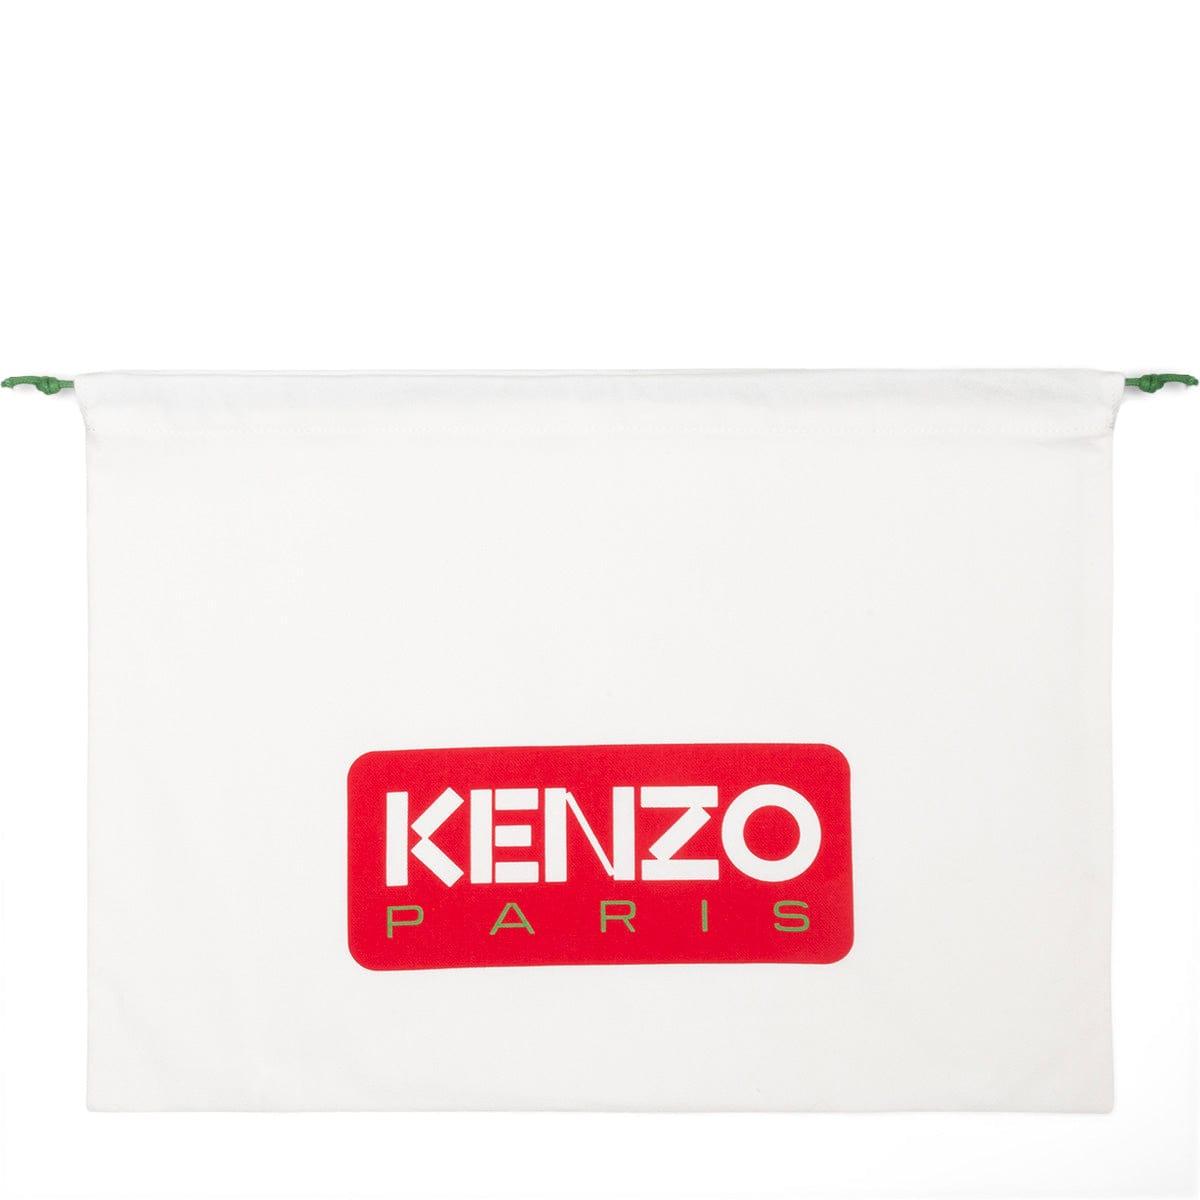 Kenzo Headwear BLACK / O/S BASEBALL CAP